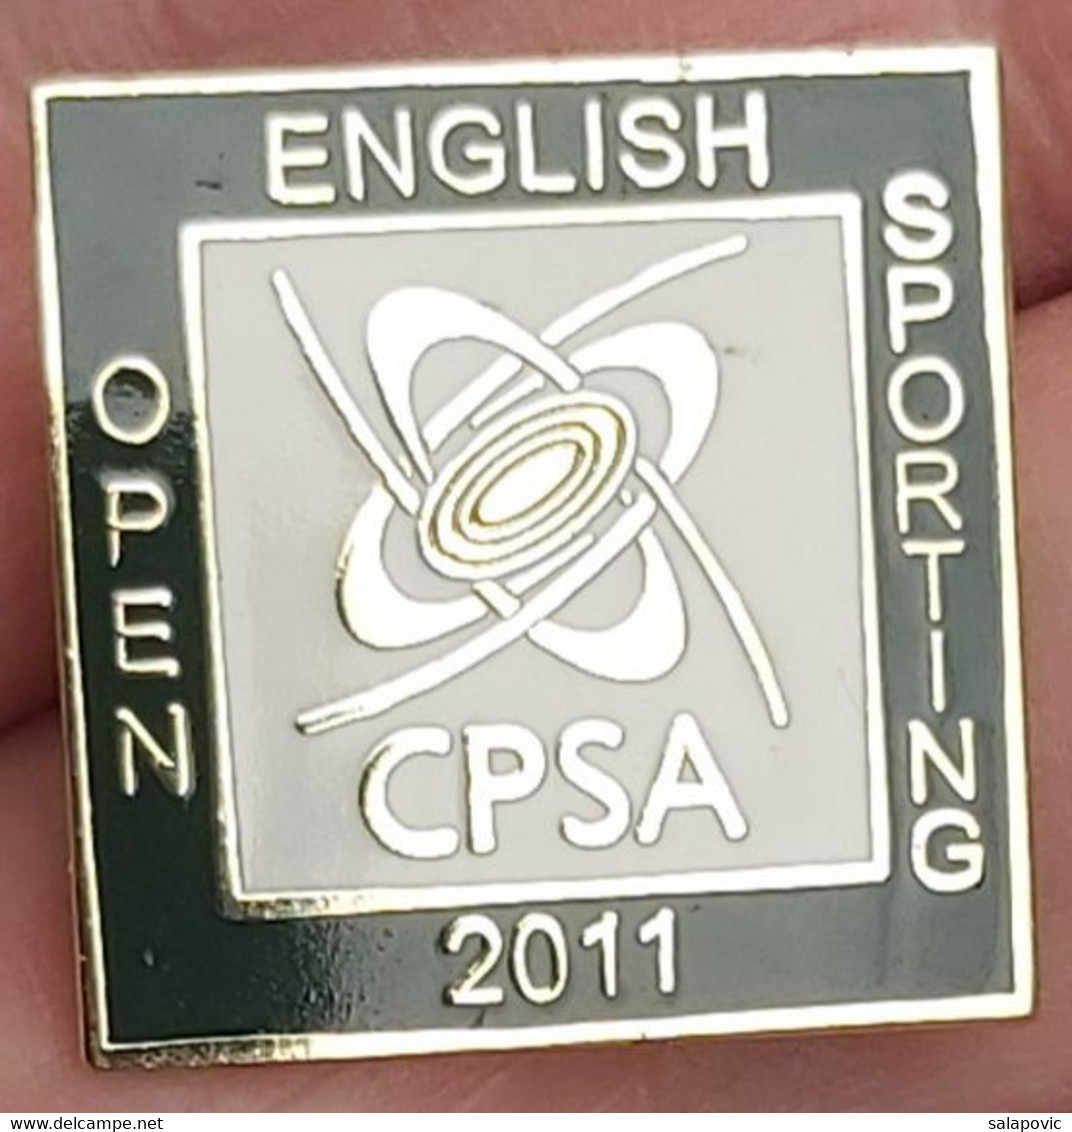 English Open Sporting (CPSA) Clay Pigeon Shooting Association  2011 Archery Shooting PINS BADGES A5/4 - Tiro Al Arco